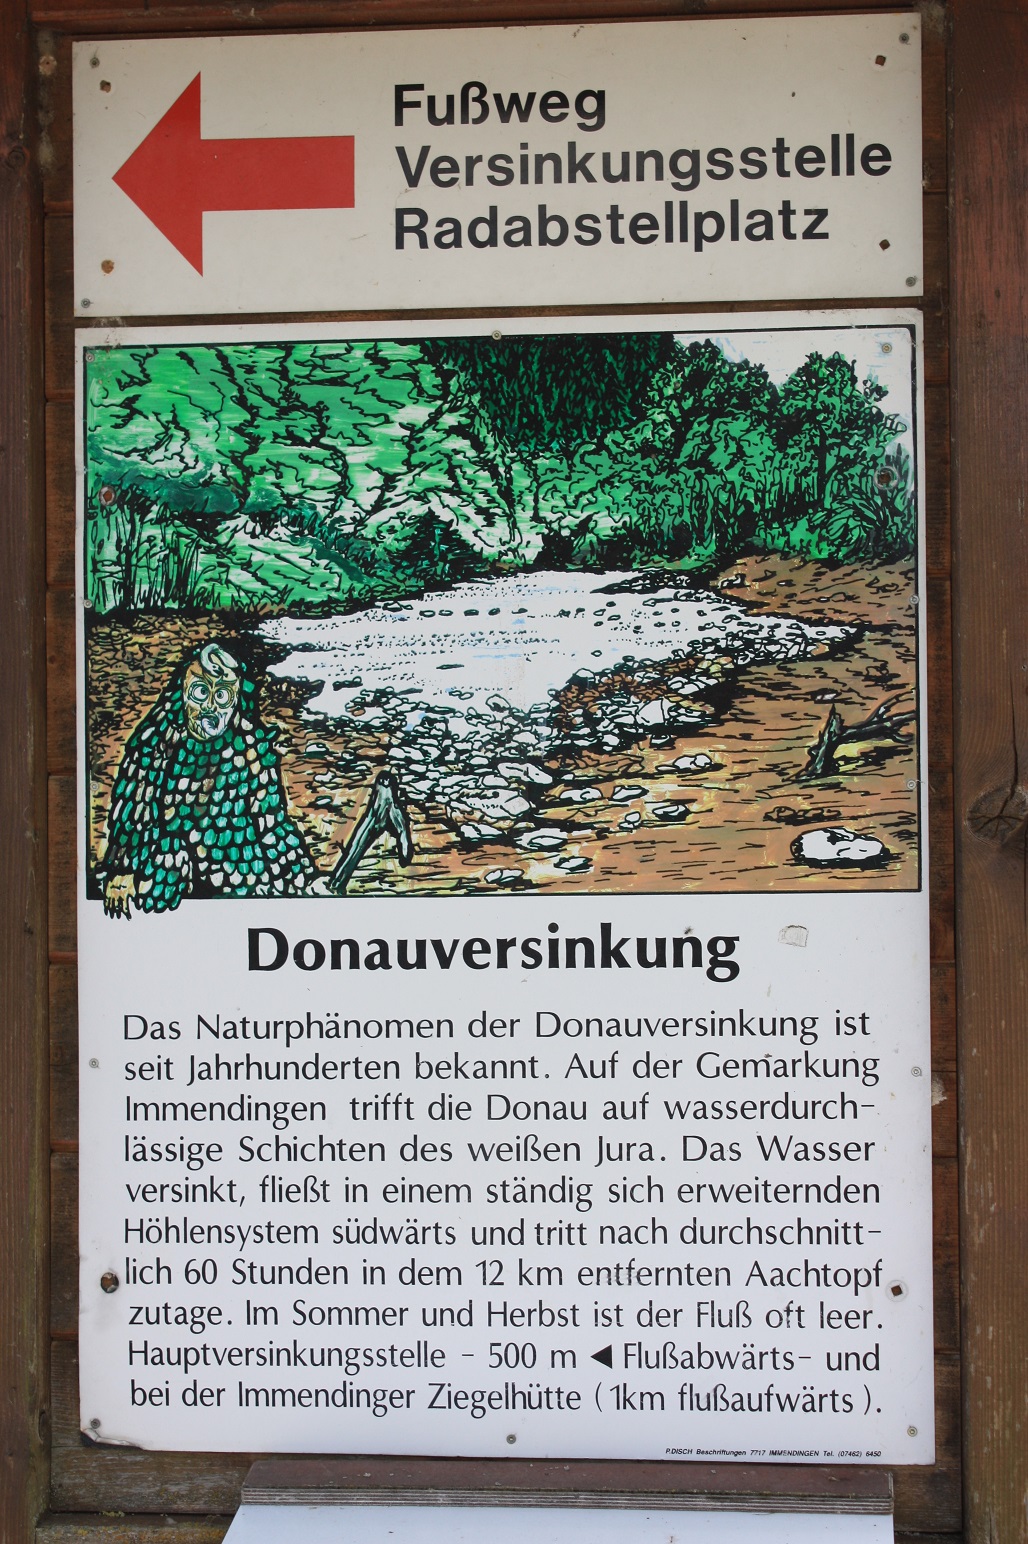 Donauversinkung